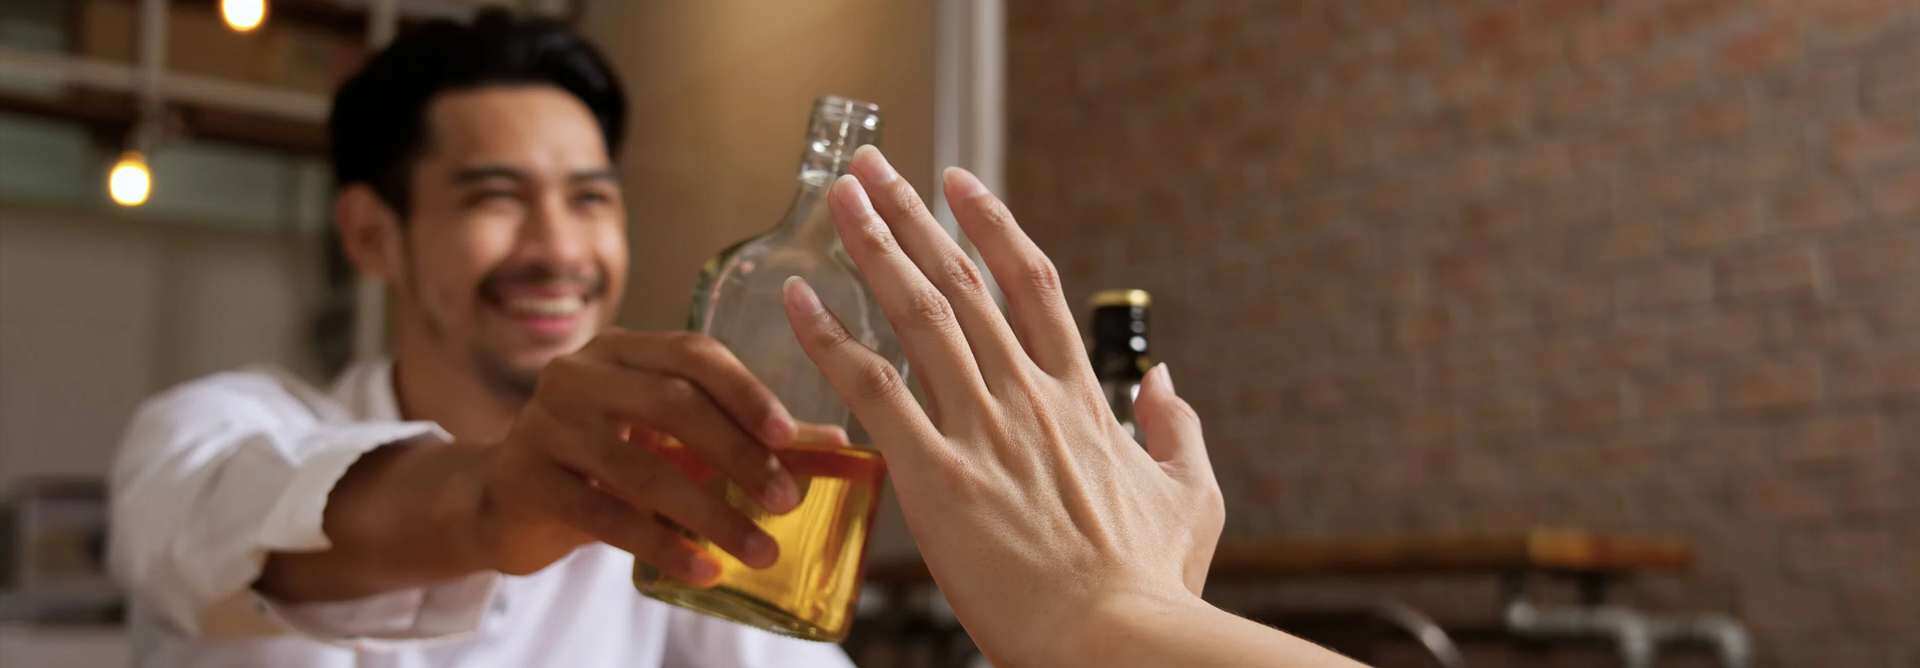 close-up-hand-refusal-alcohol